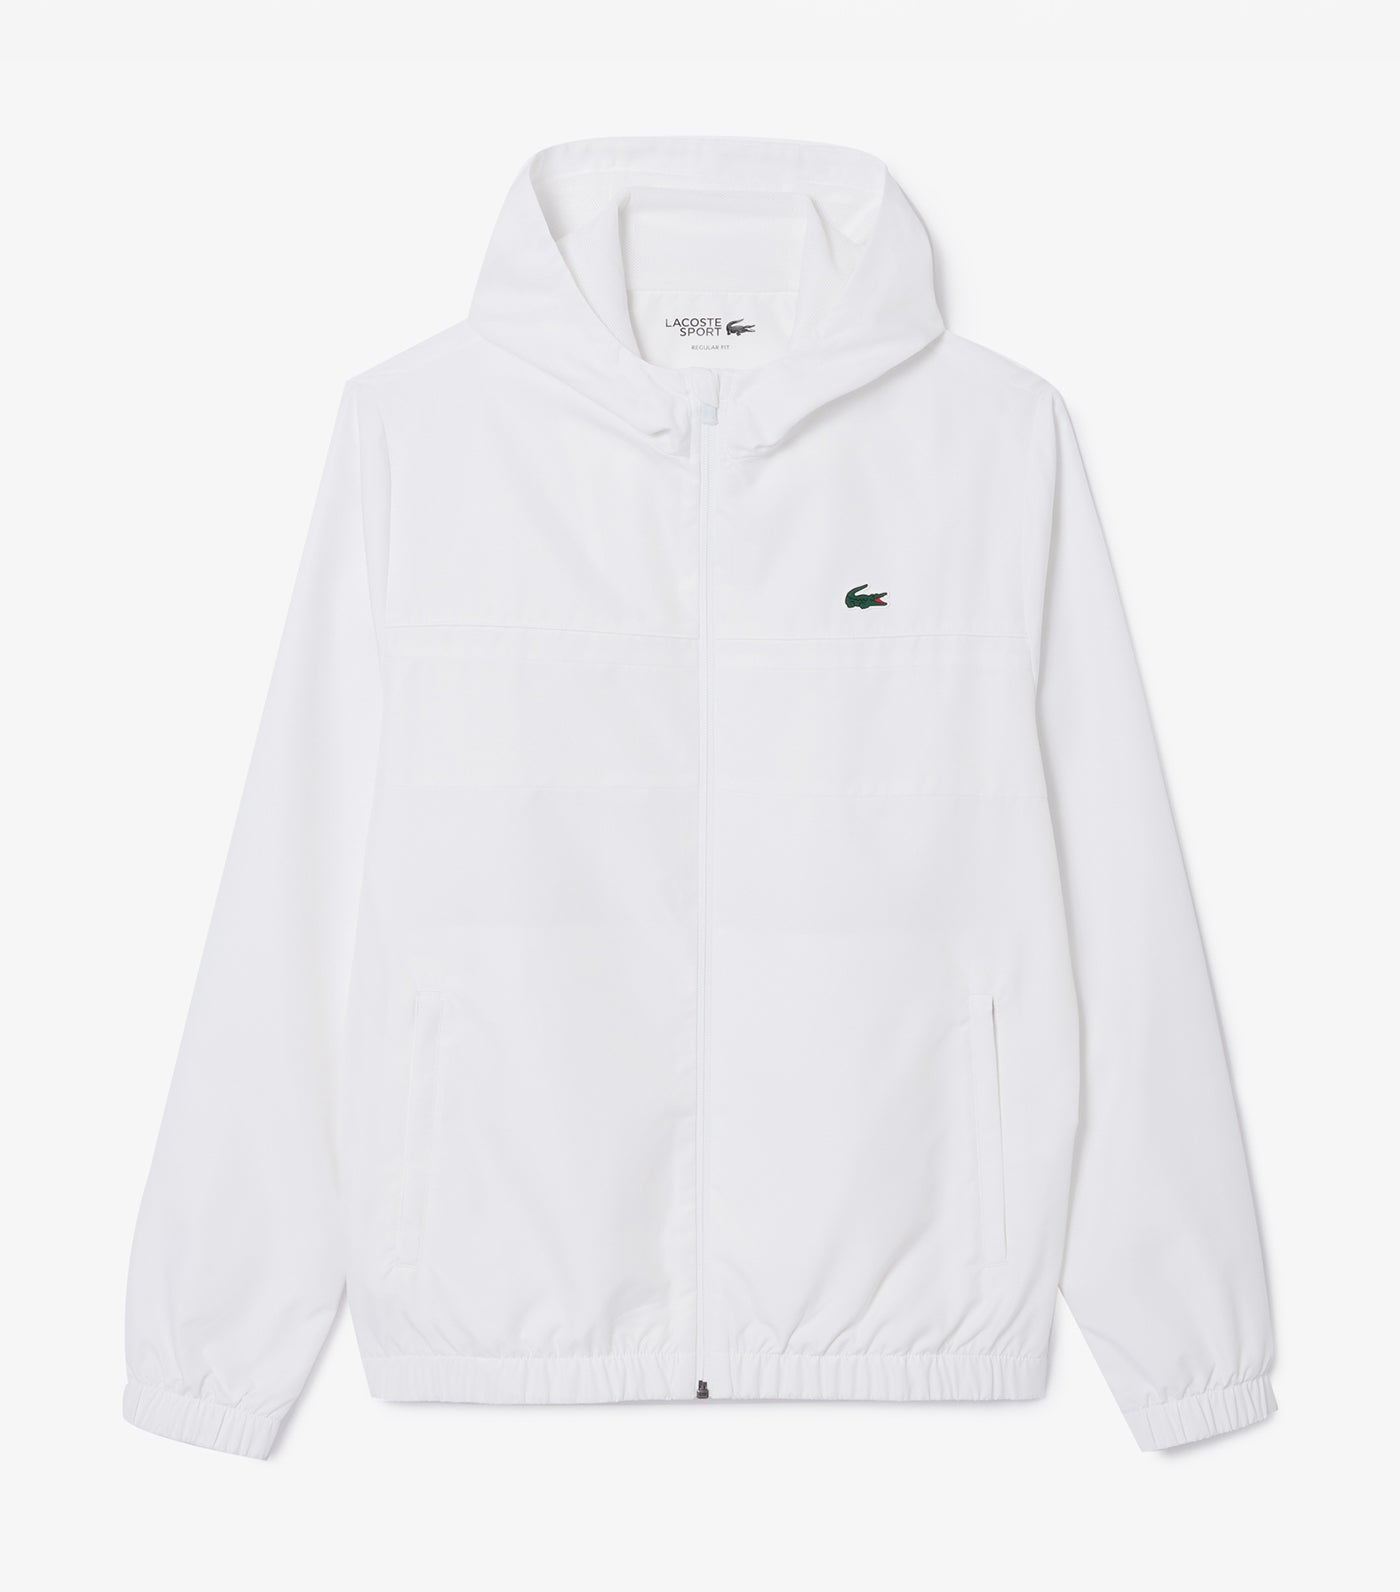 Recycled Fiber Zipped Hooded Sport Jacket White/White-White